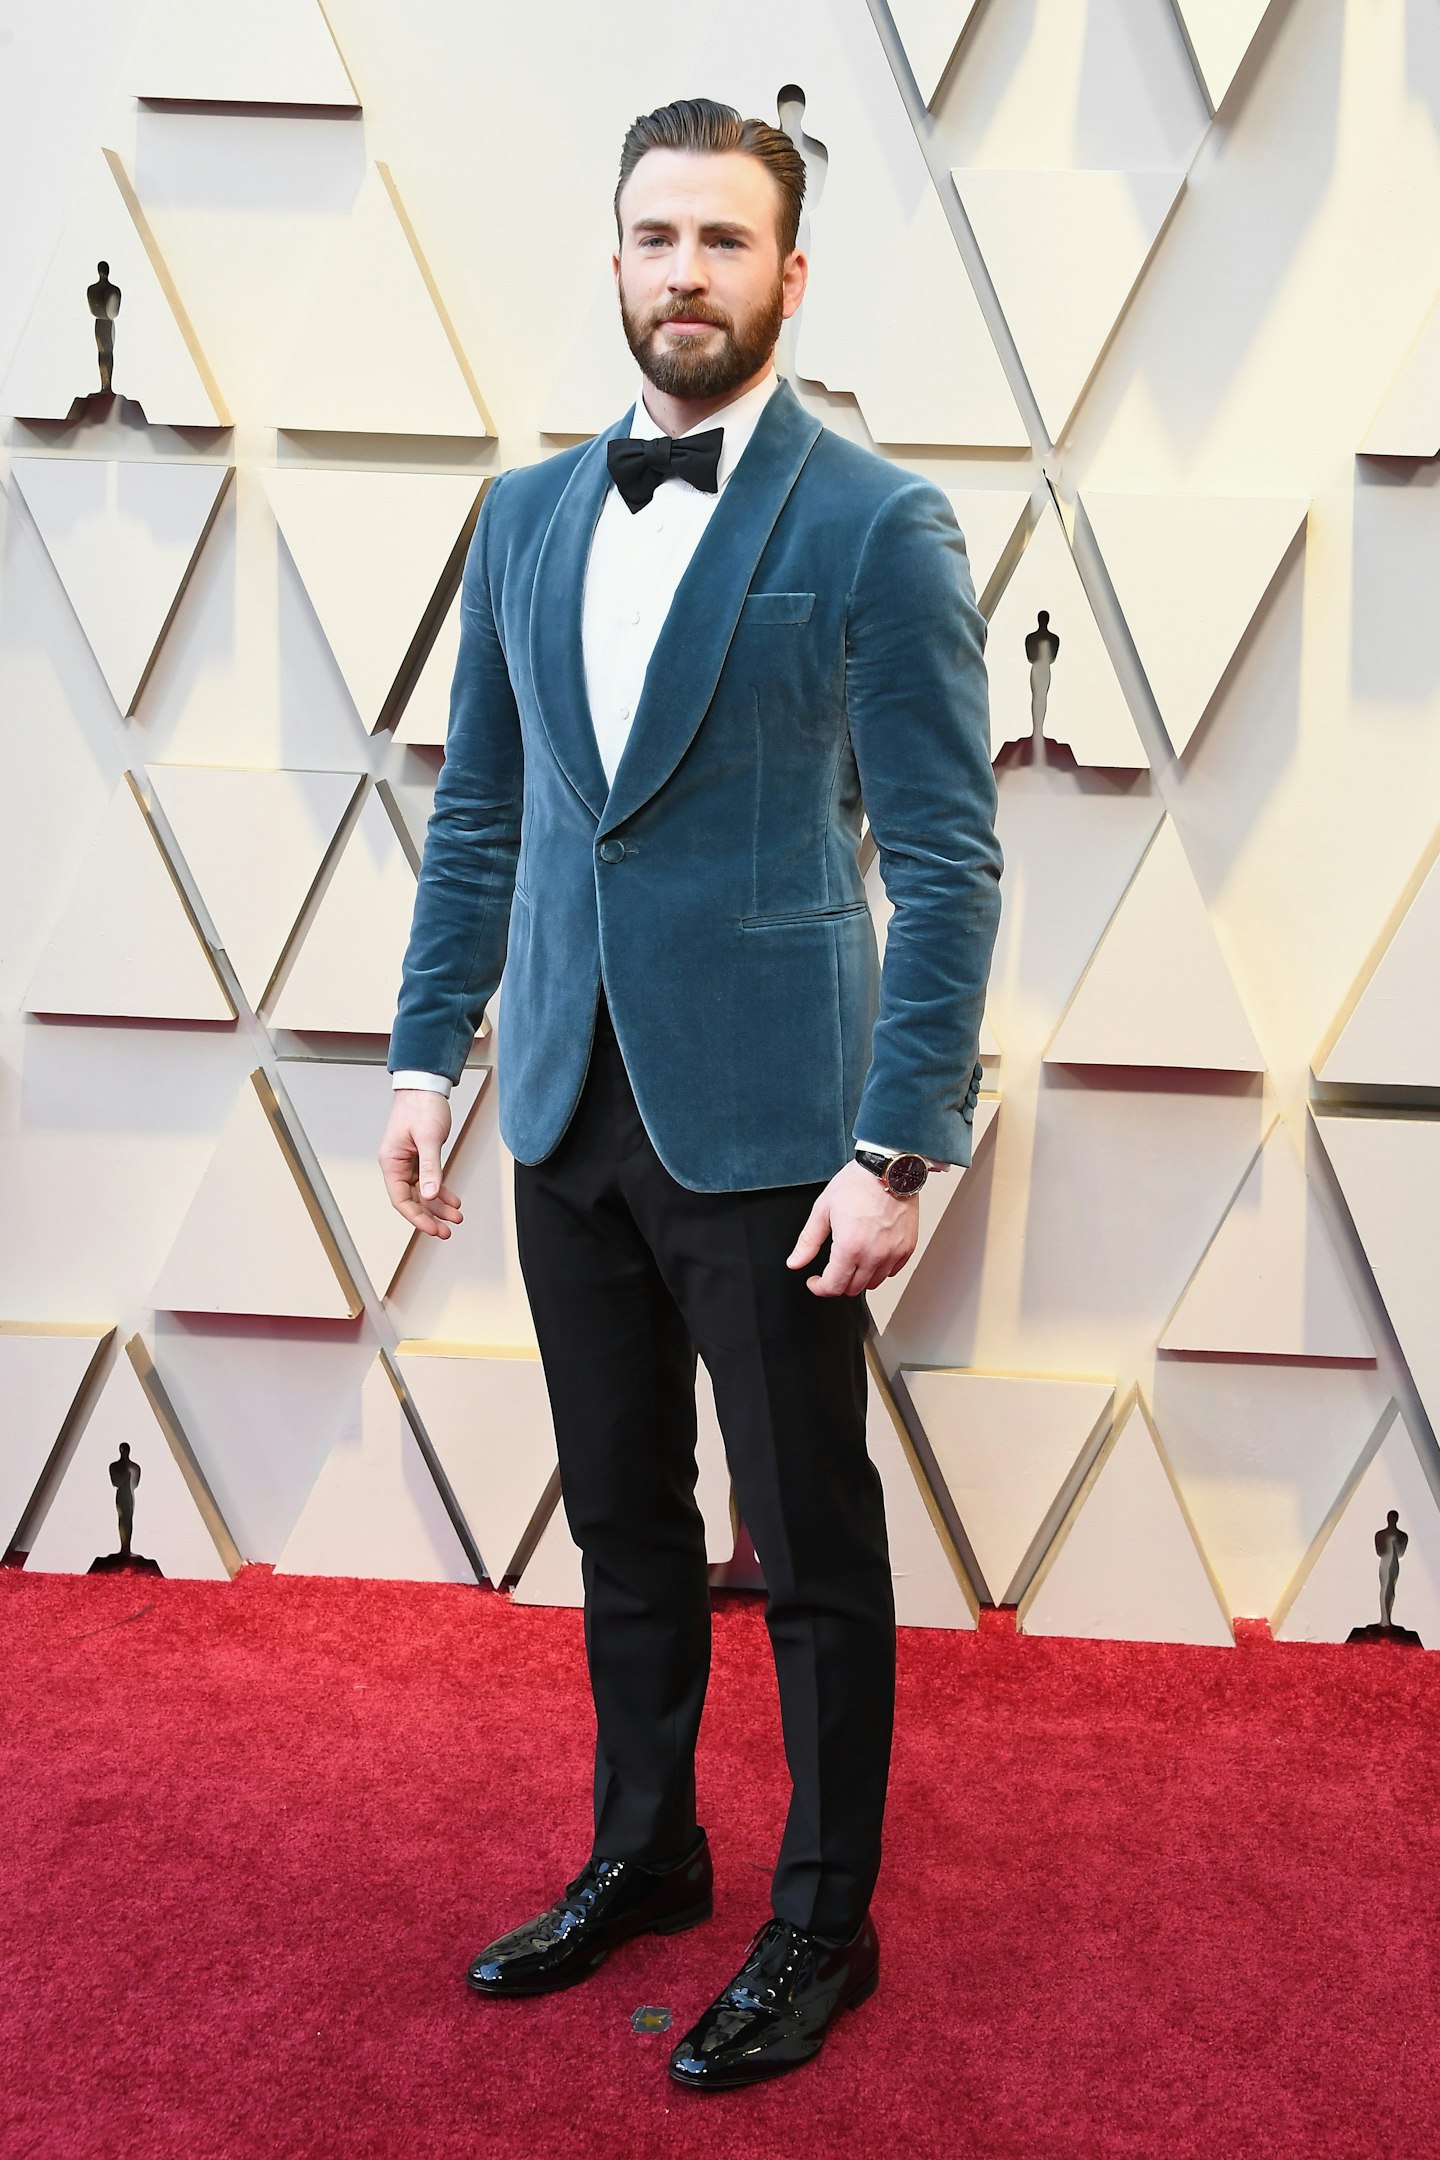 Chris Evans at the 2019 Oscars